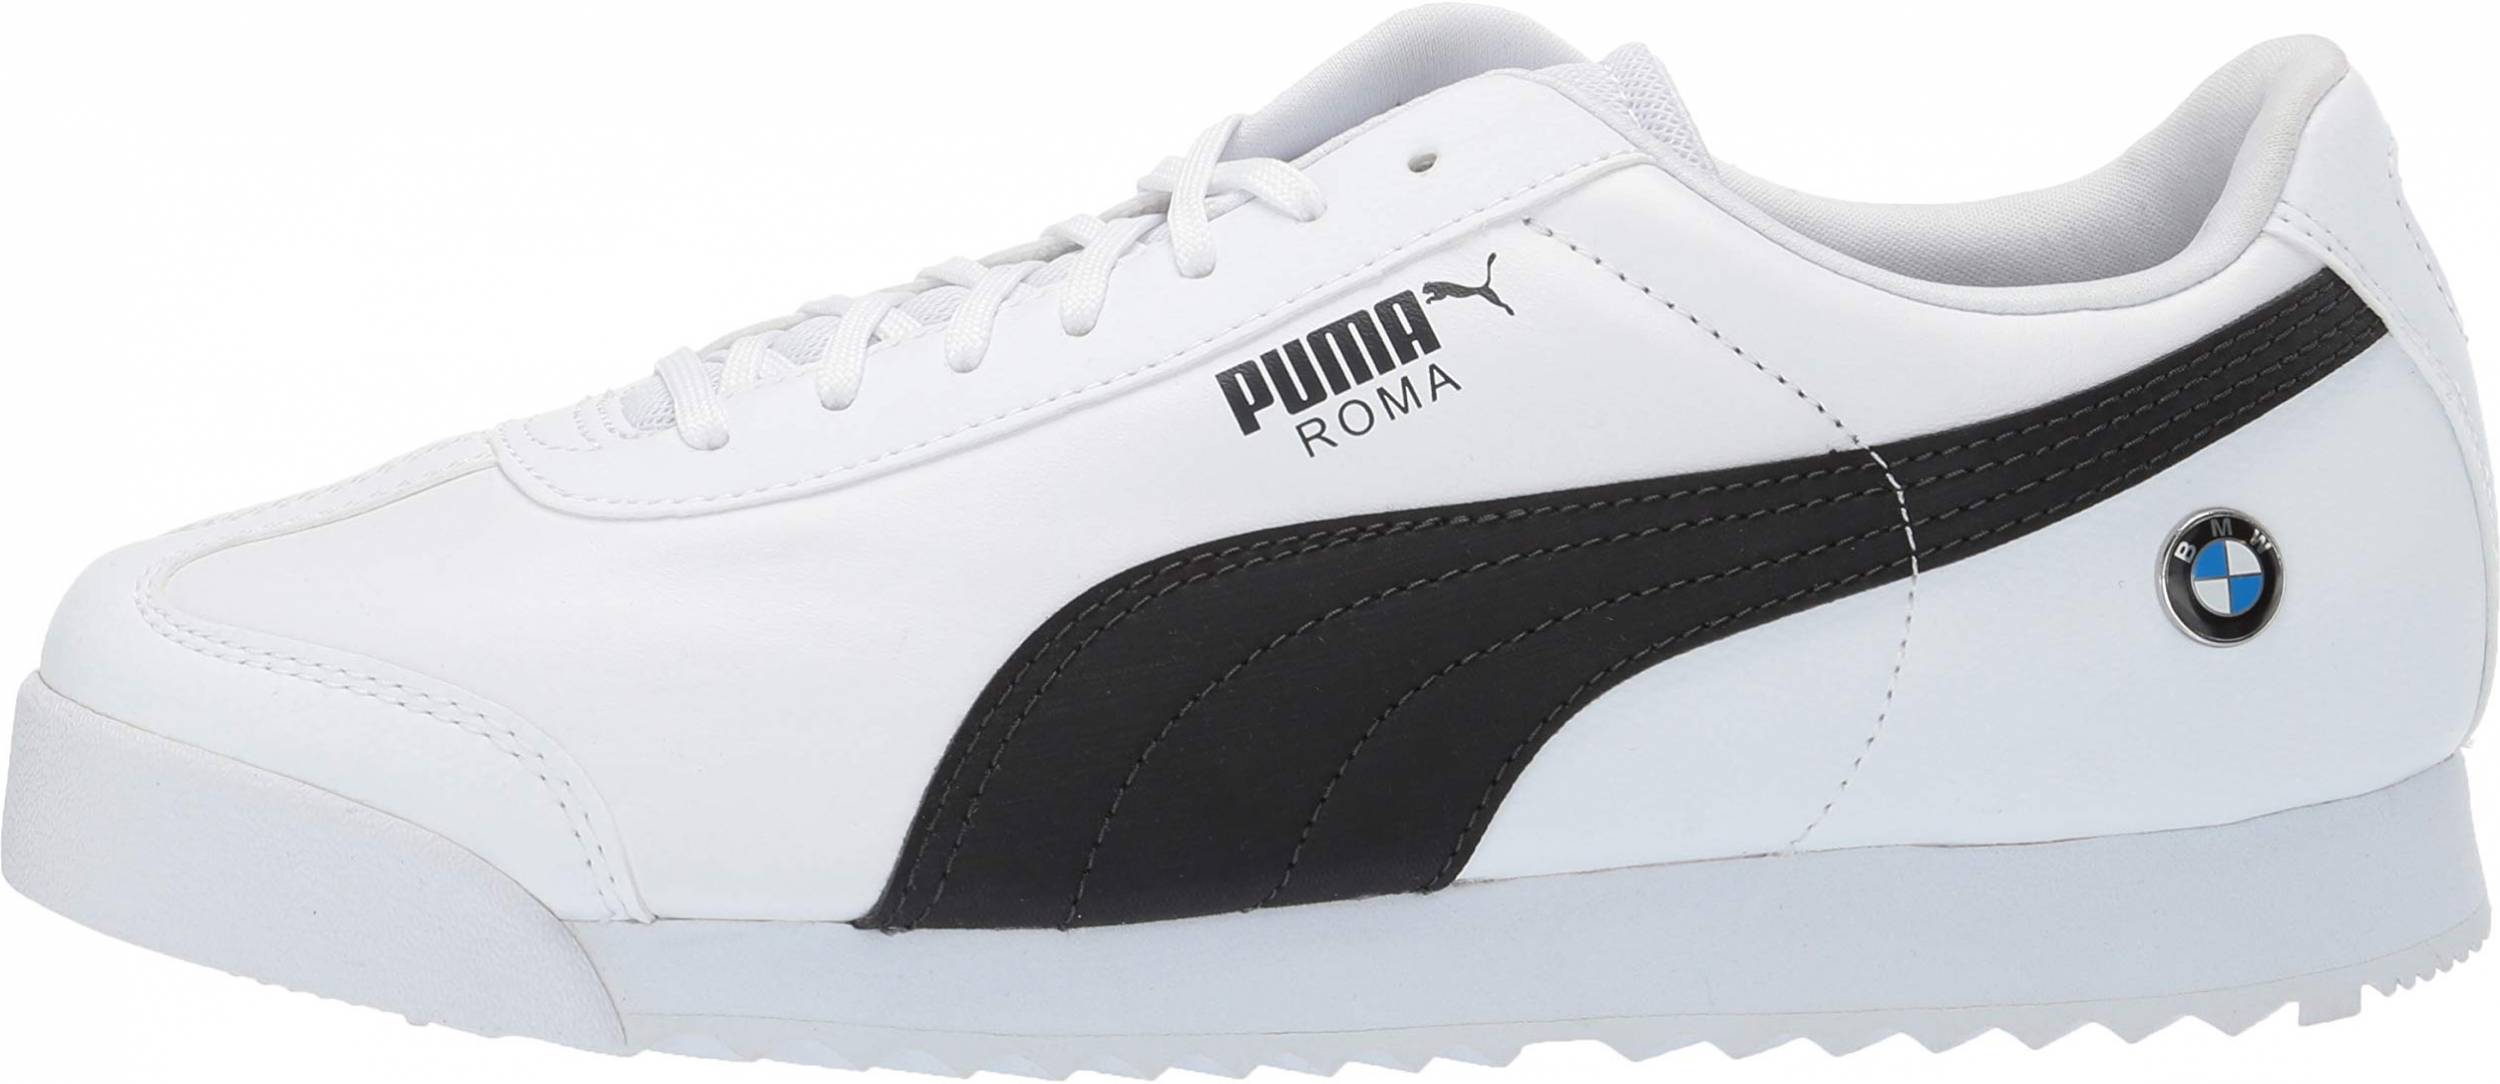 puma sneakers shoes white